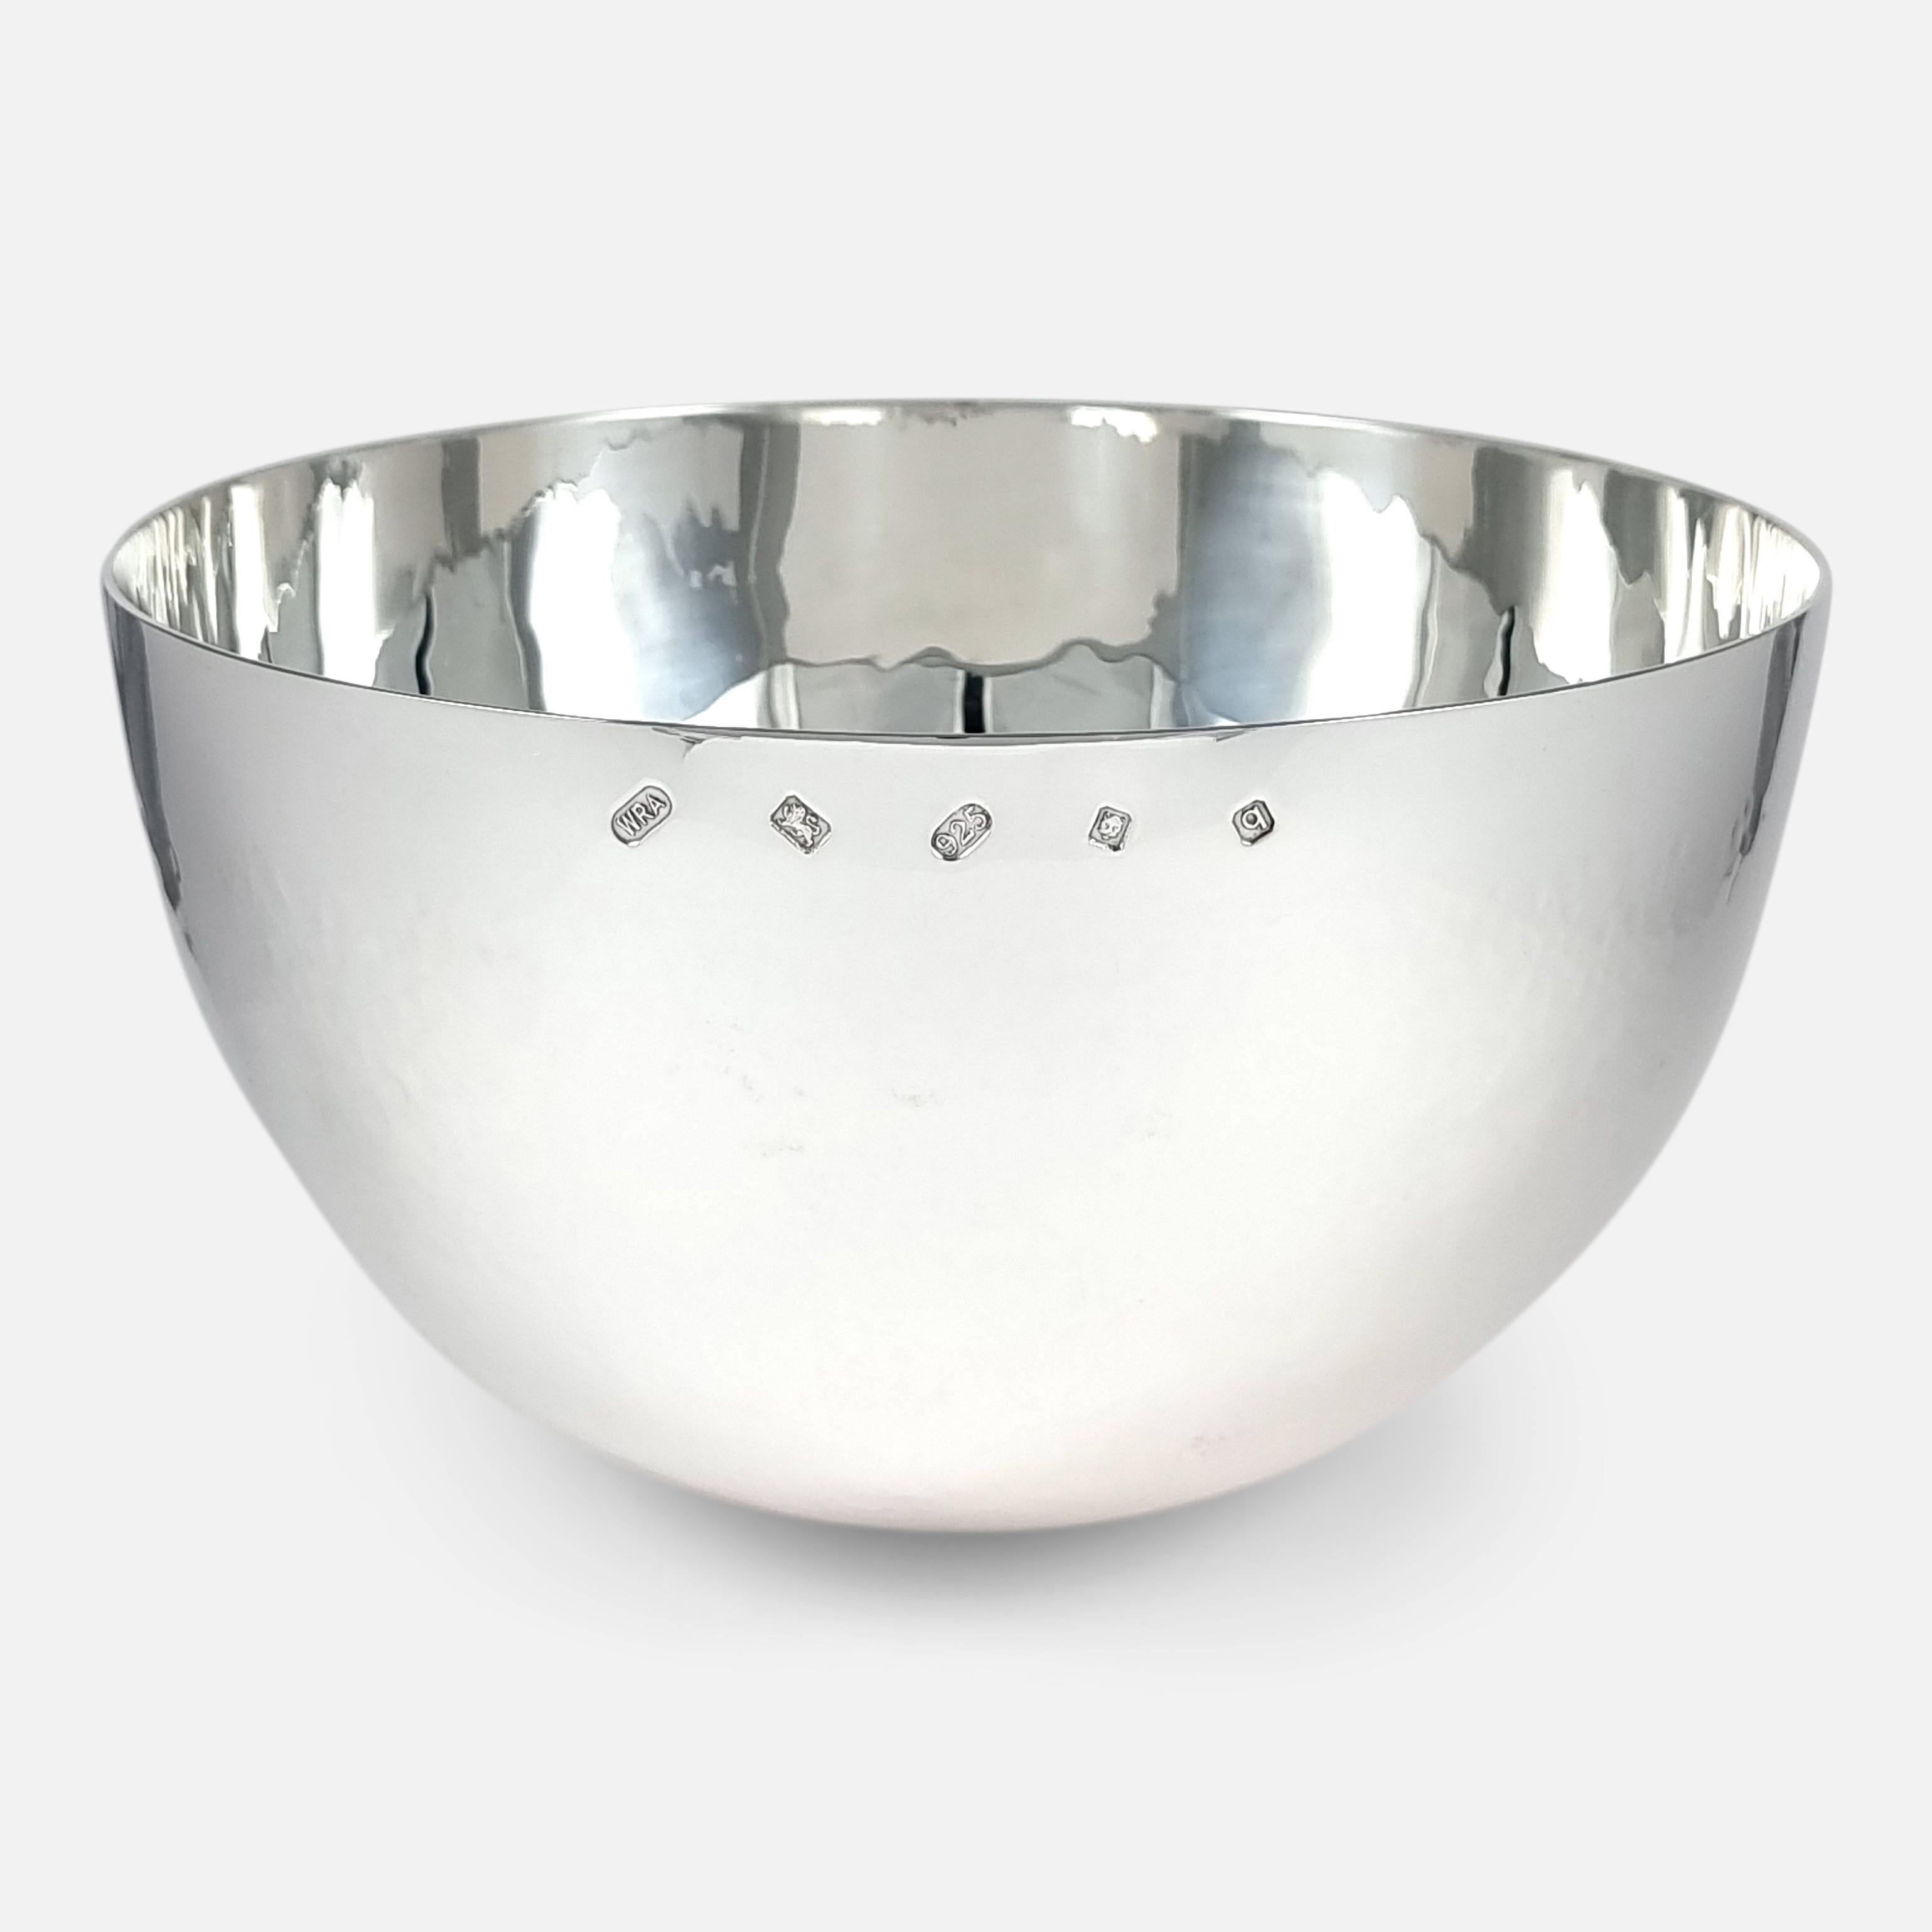 Elizabeth II Sterling Silver Tumble Fruit Bowl, William & Son, 2015 For Sale 2